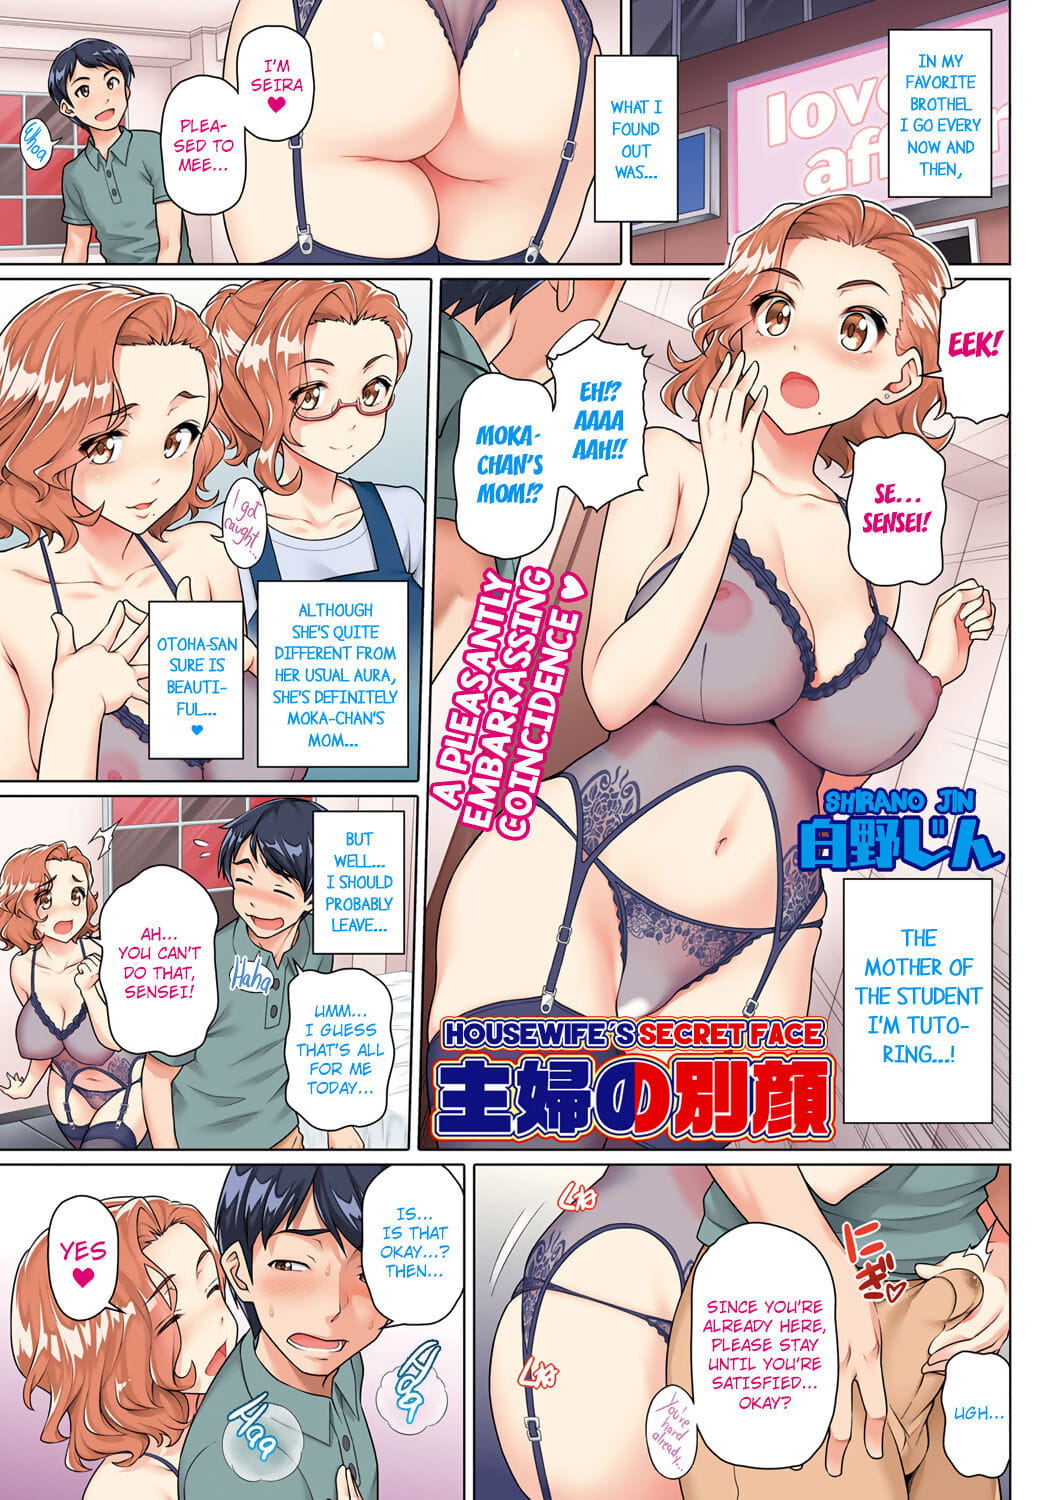 Shufu no betsu kao - Housewifes secret face page 1